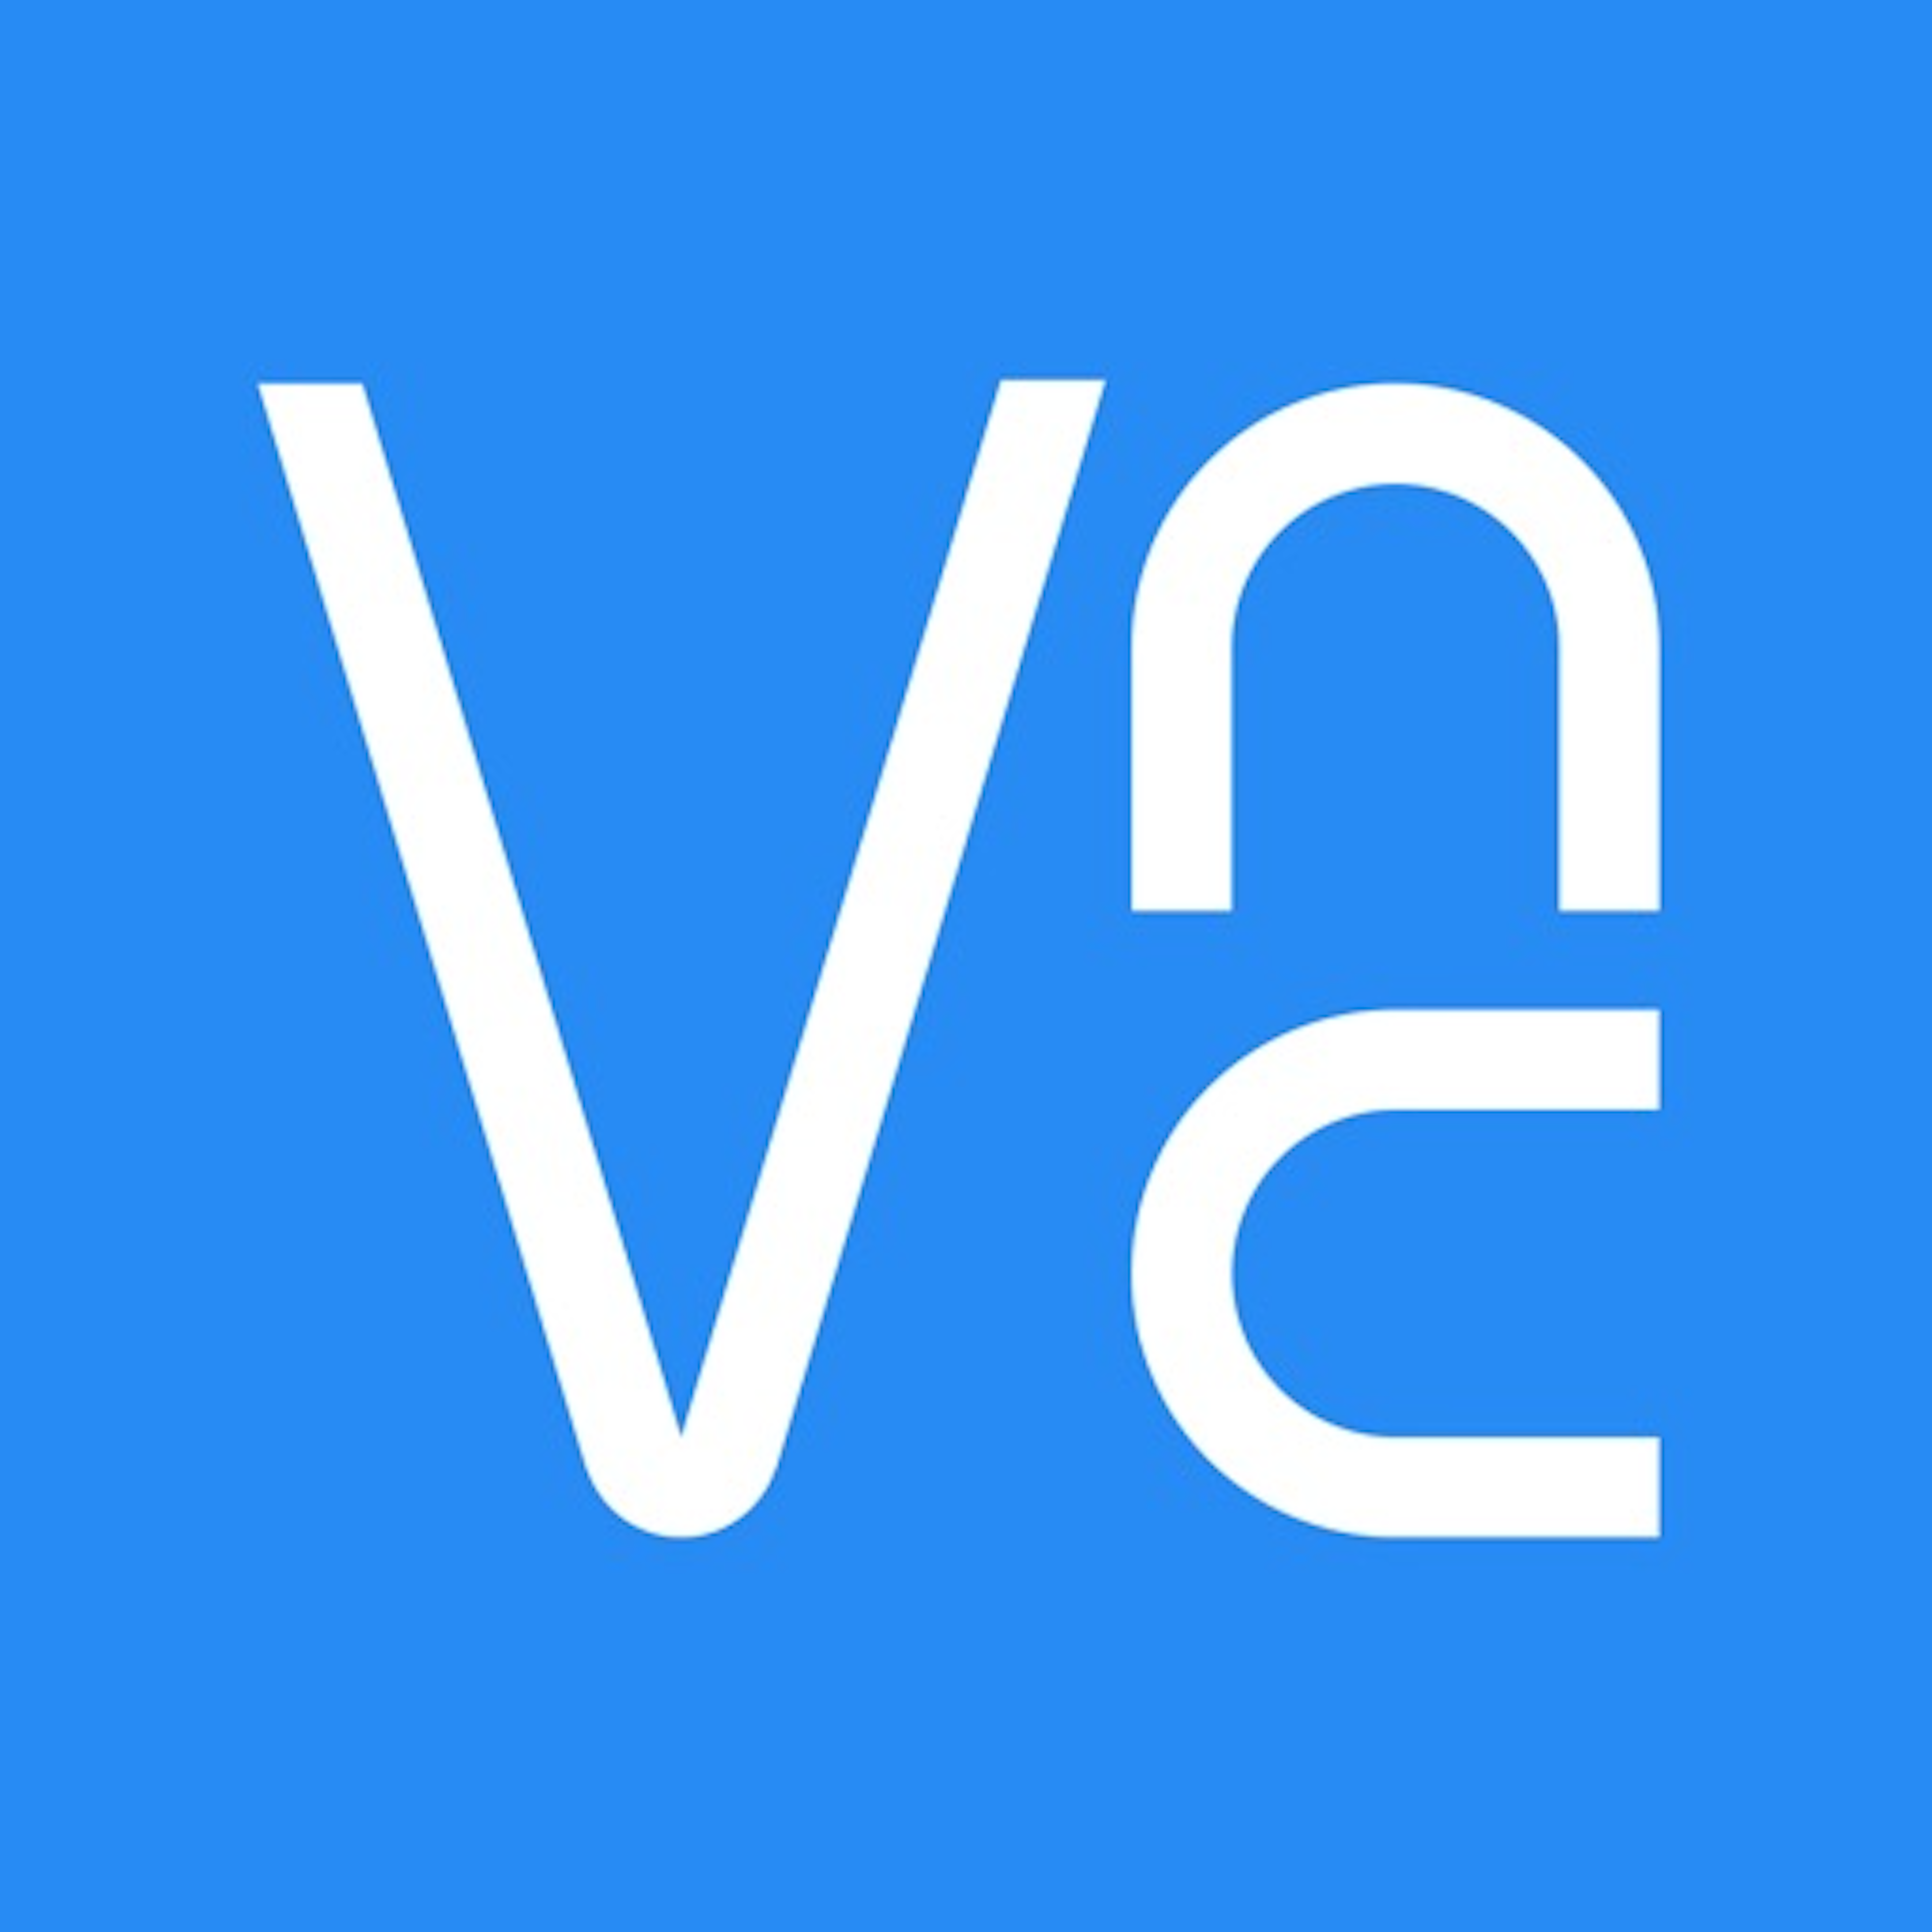 vnc viewer software download